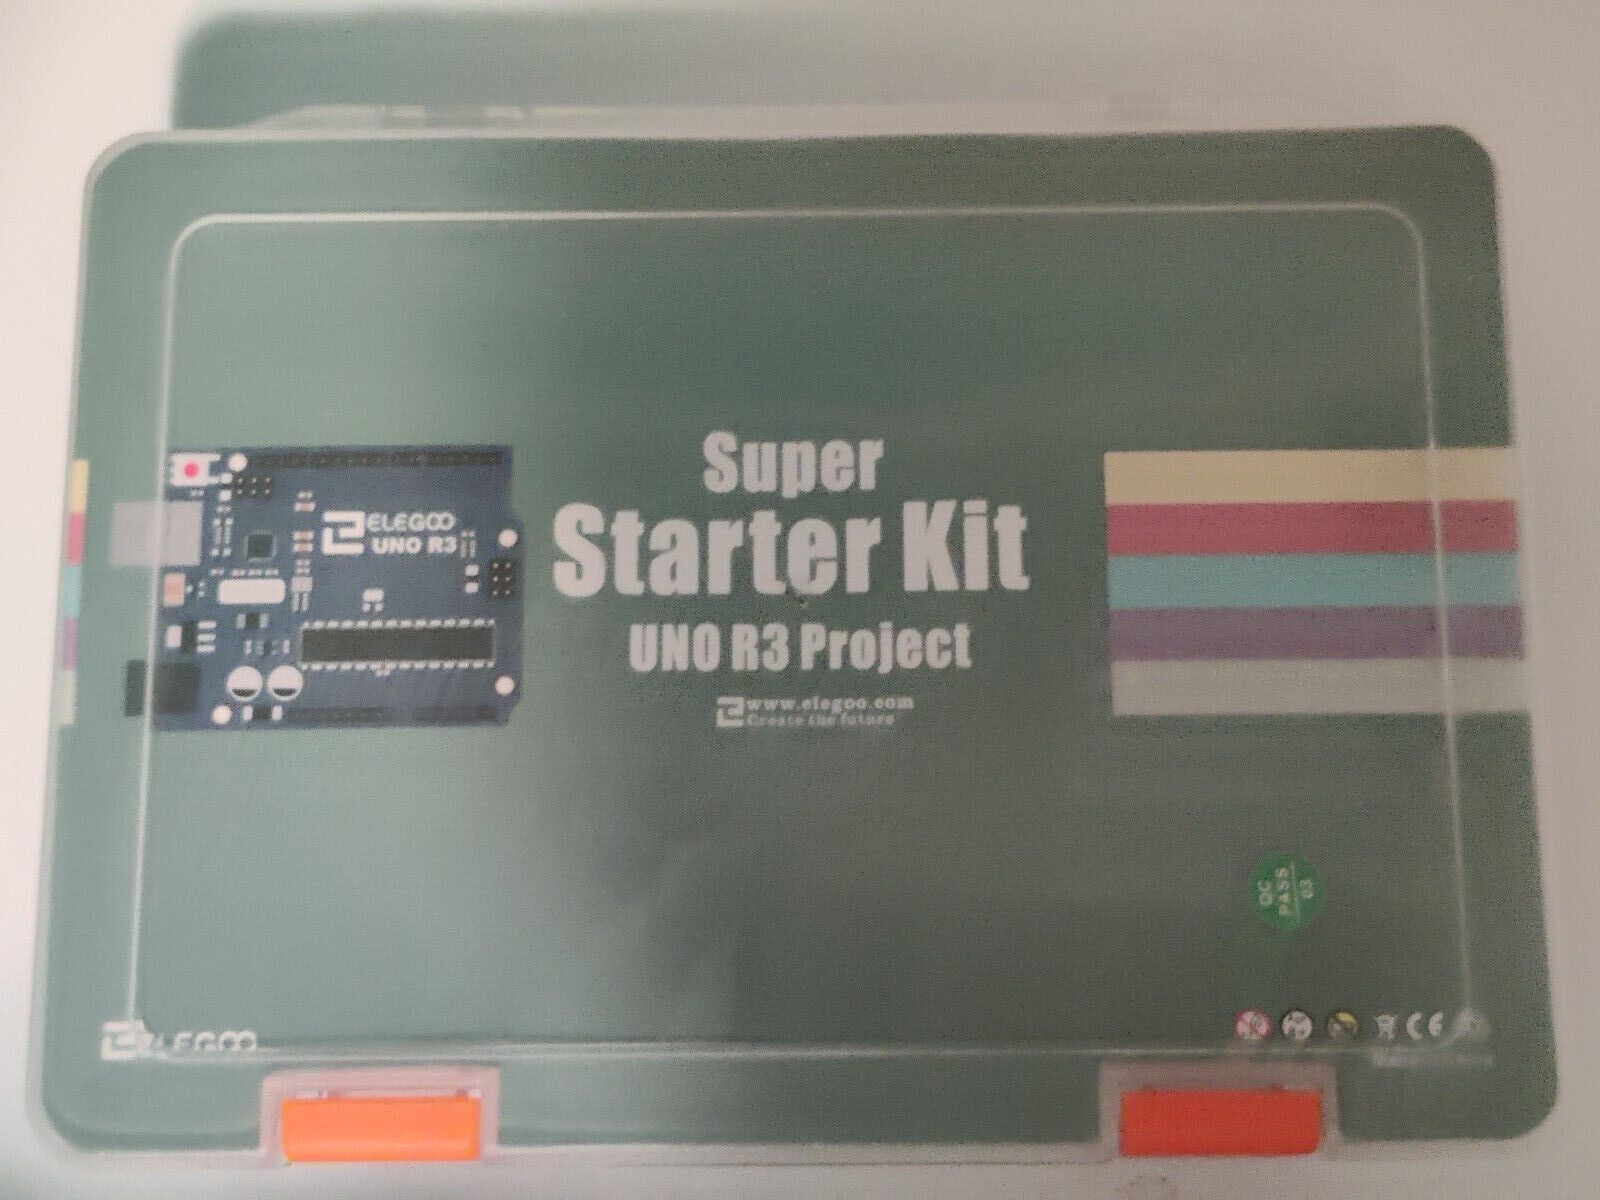 UNO R3 Project Super Starter Computer Kit